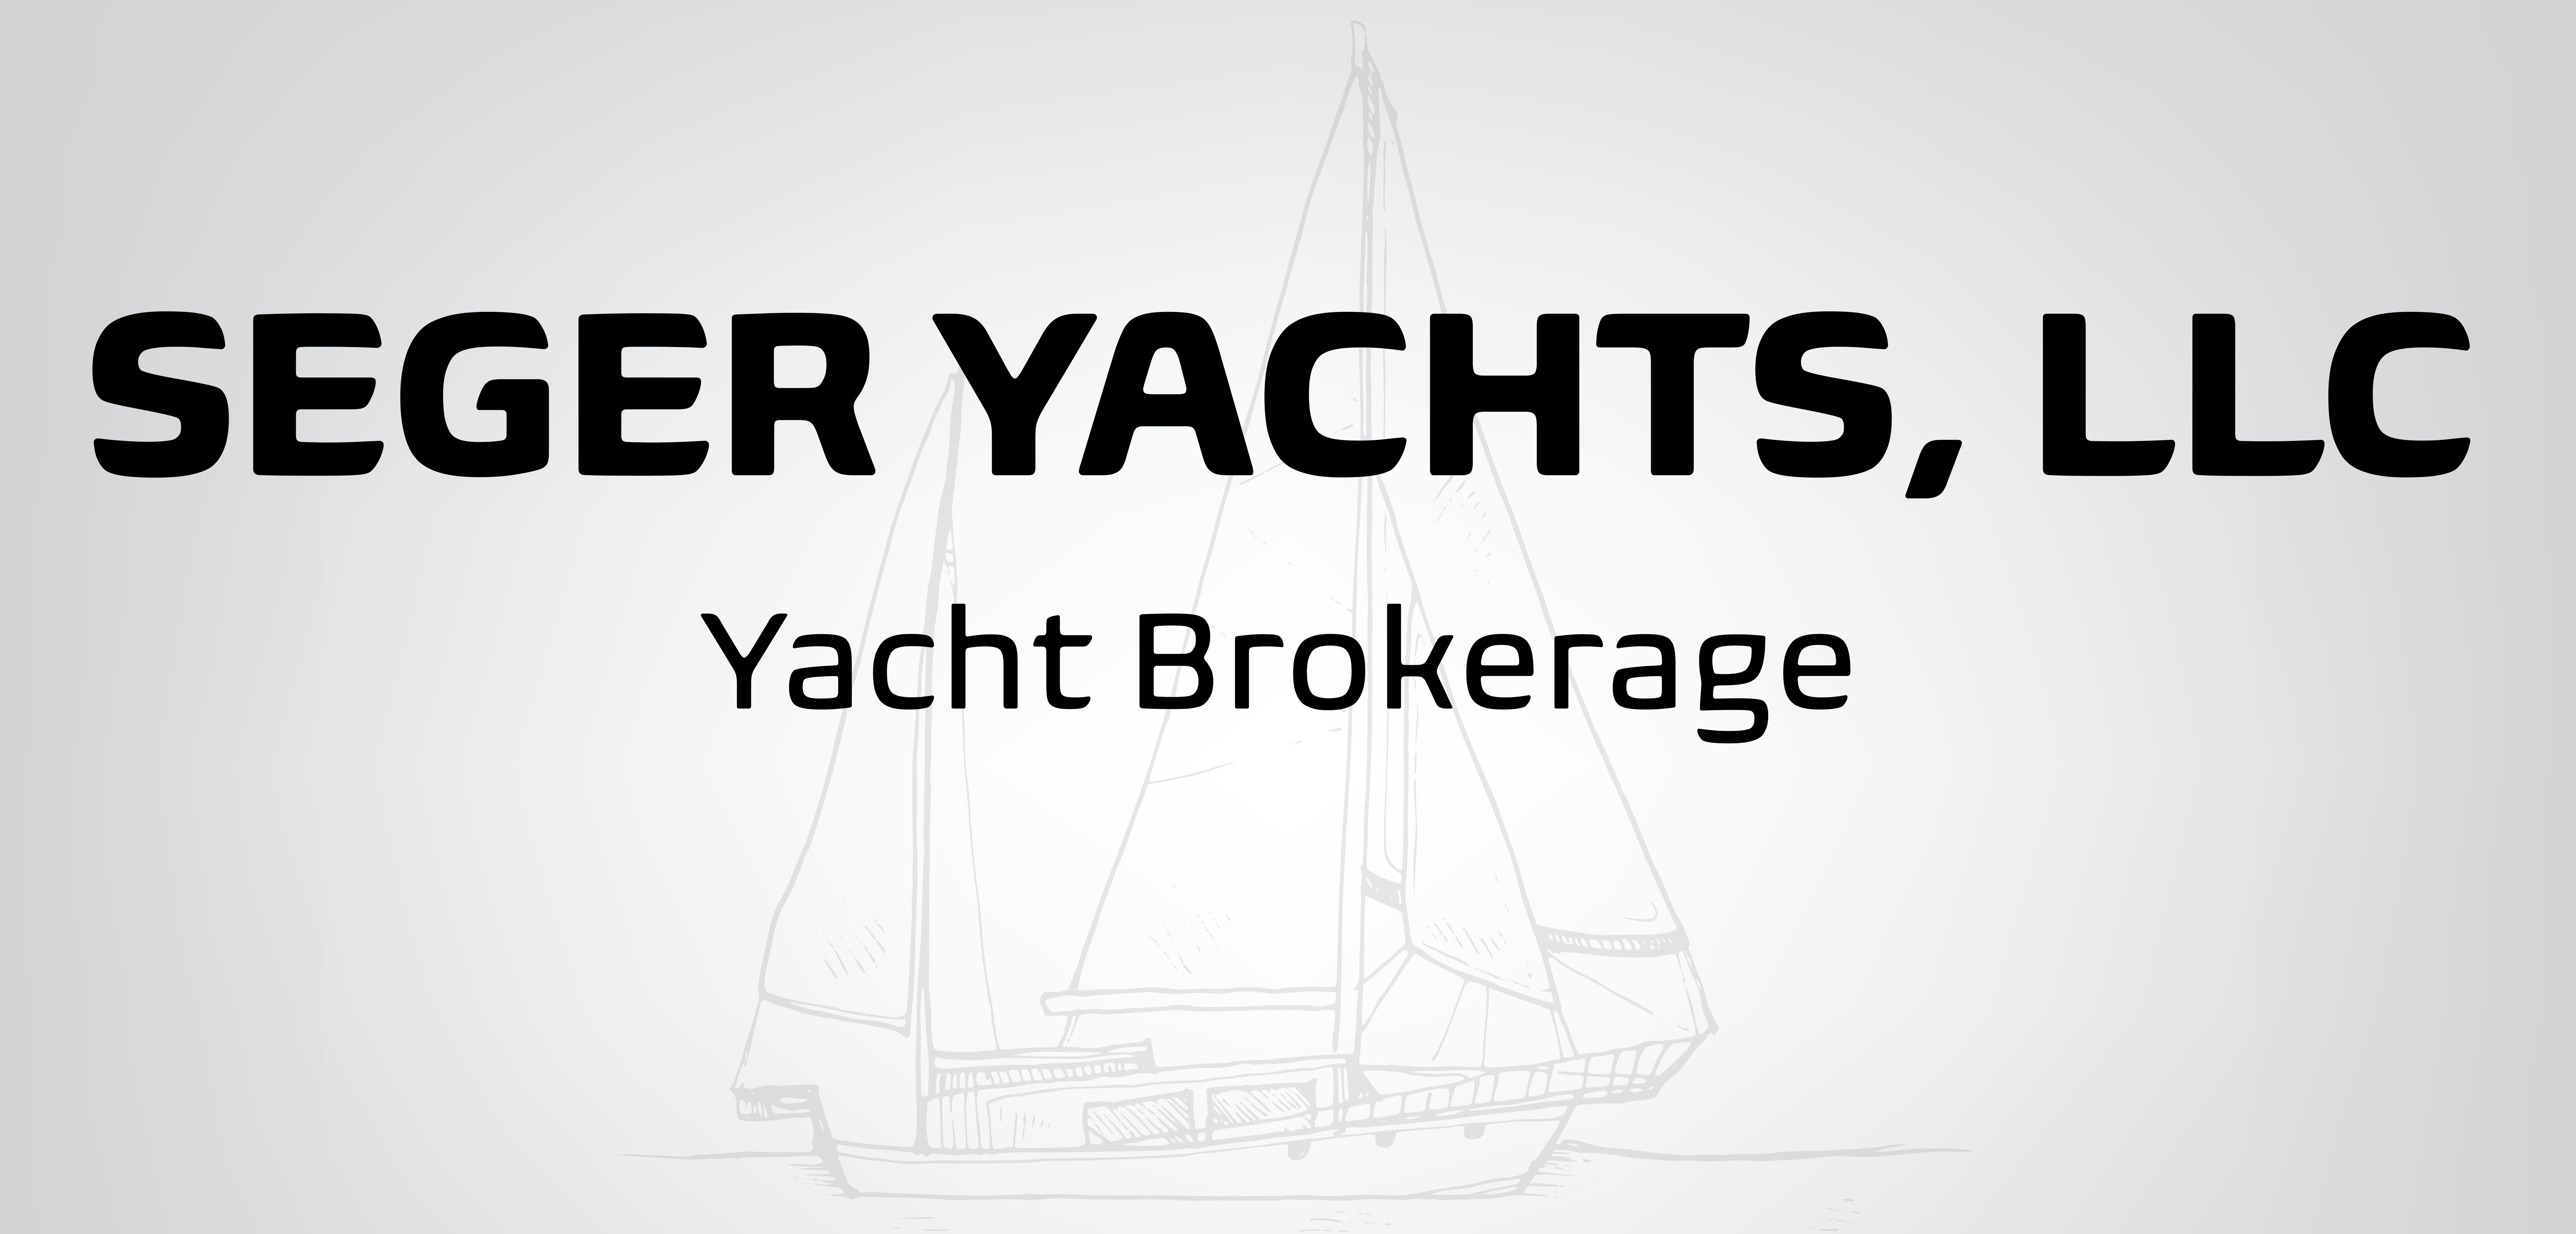 Seger Yachts, LLC